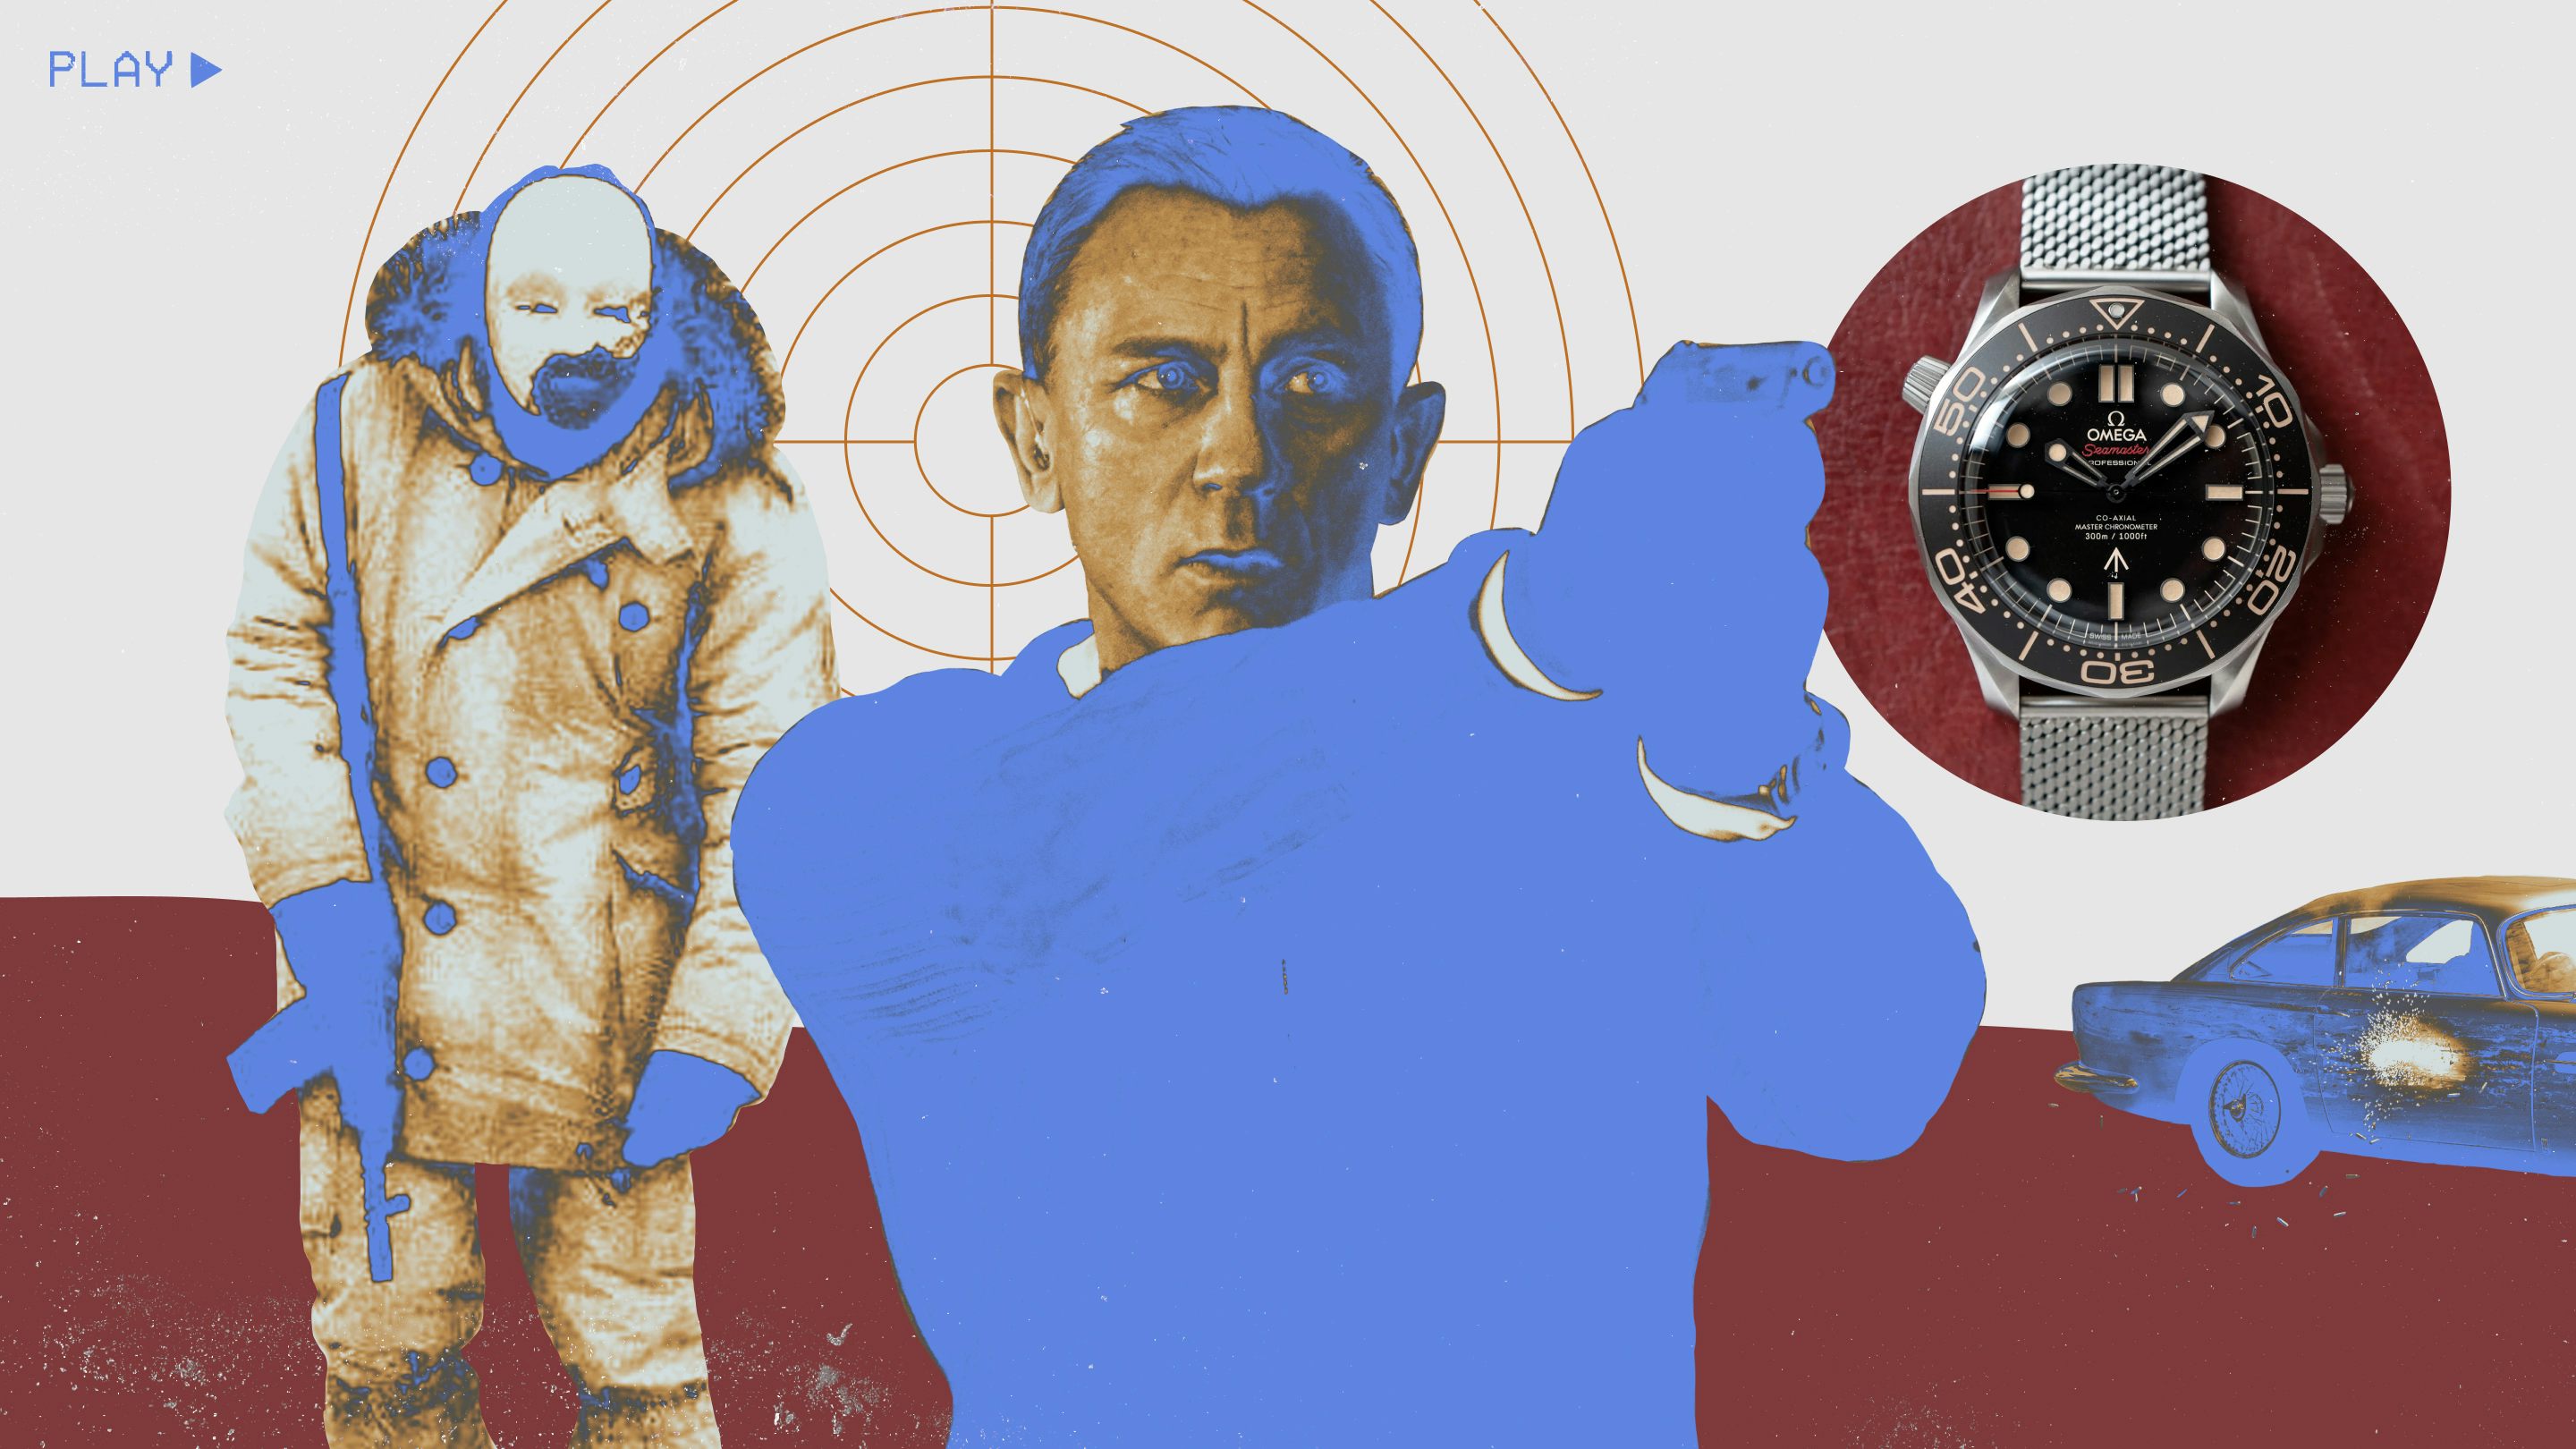 What Watch Did Daniel Craig Wear In 'No Time To Die'?